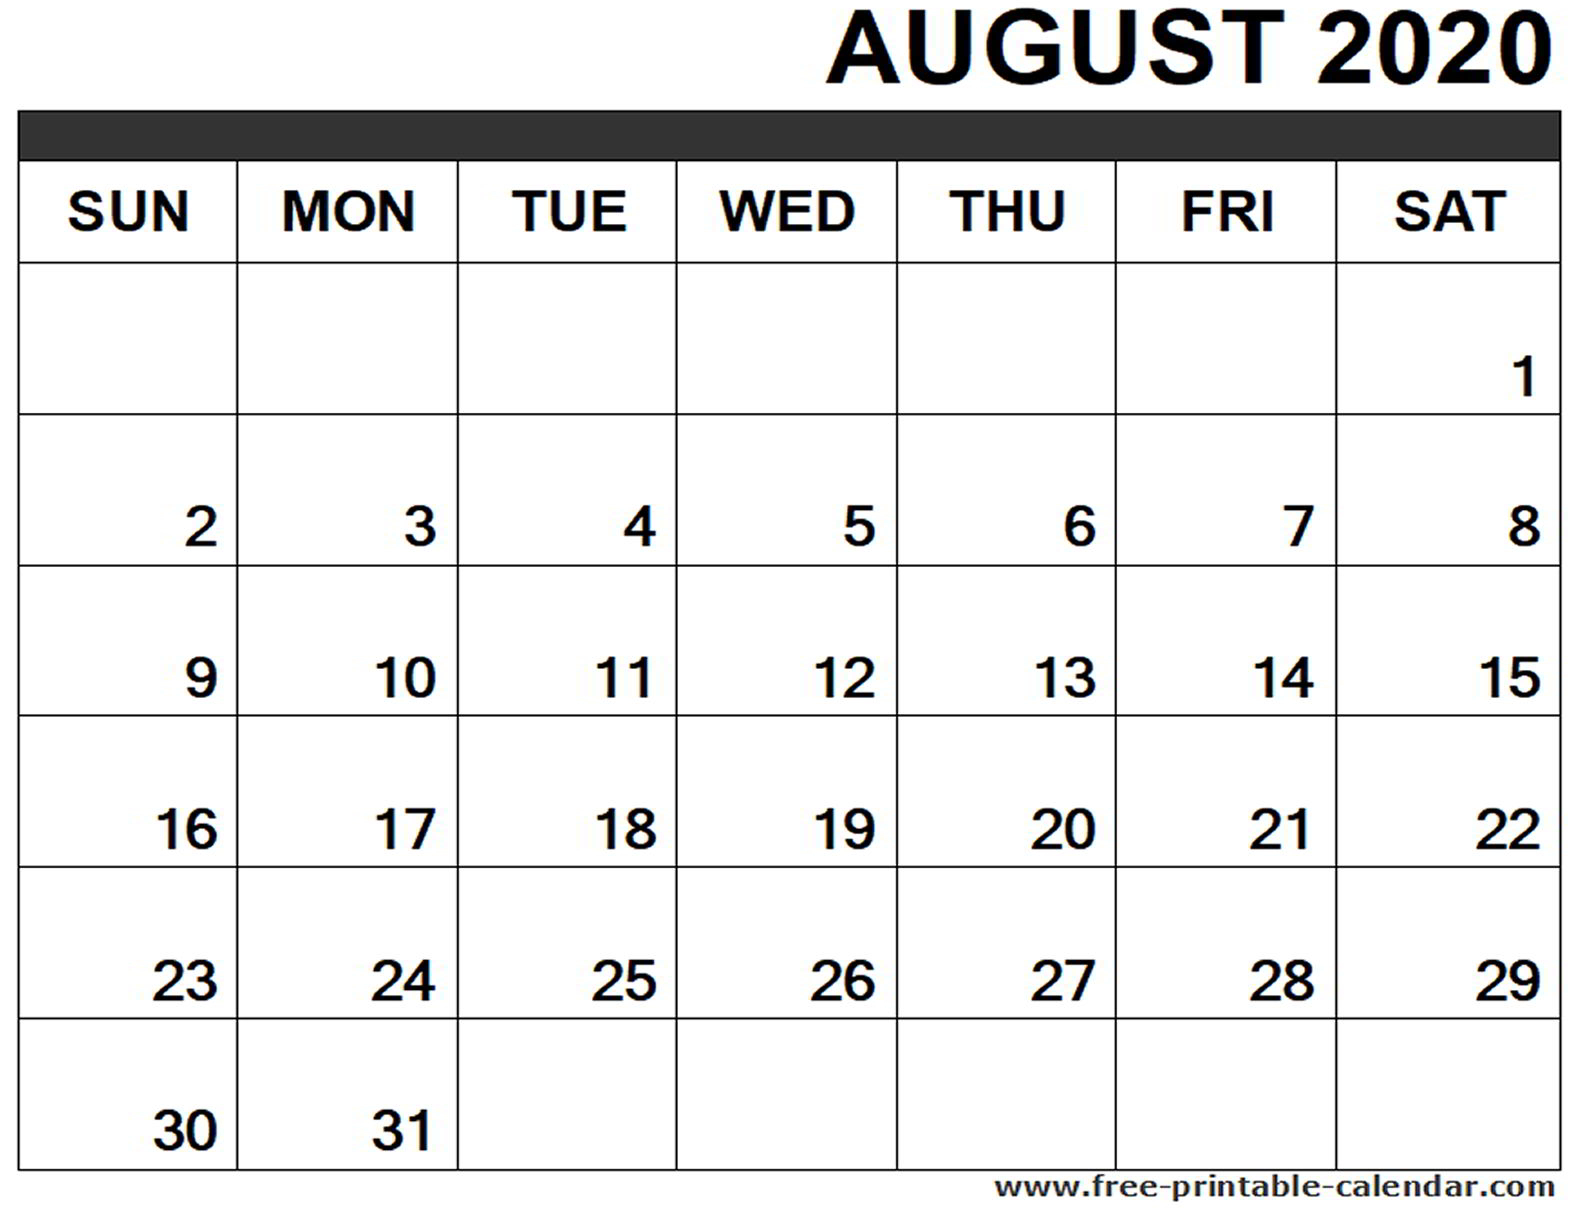 August 2020 Calendar Printable - Free-Printable-Calendar